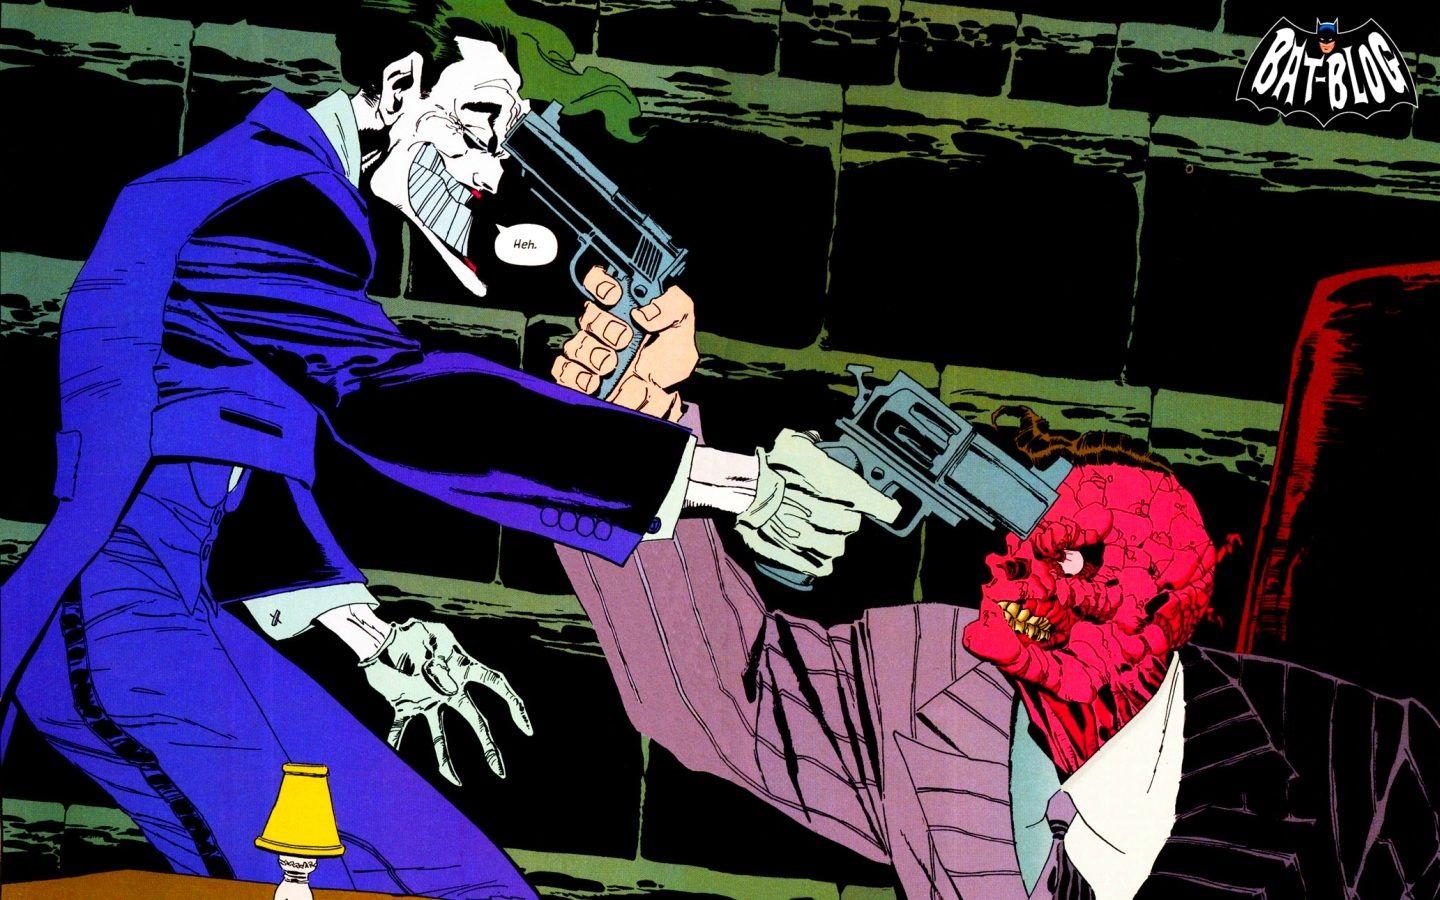 BAT, BATMAN TOYS and COLLECTIBLES: Batman's HARVEY DENT IS